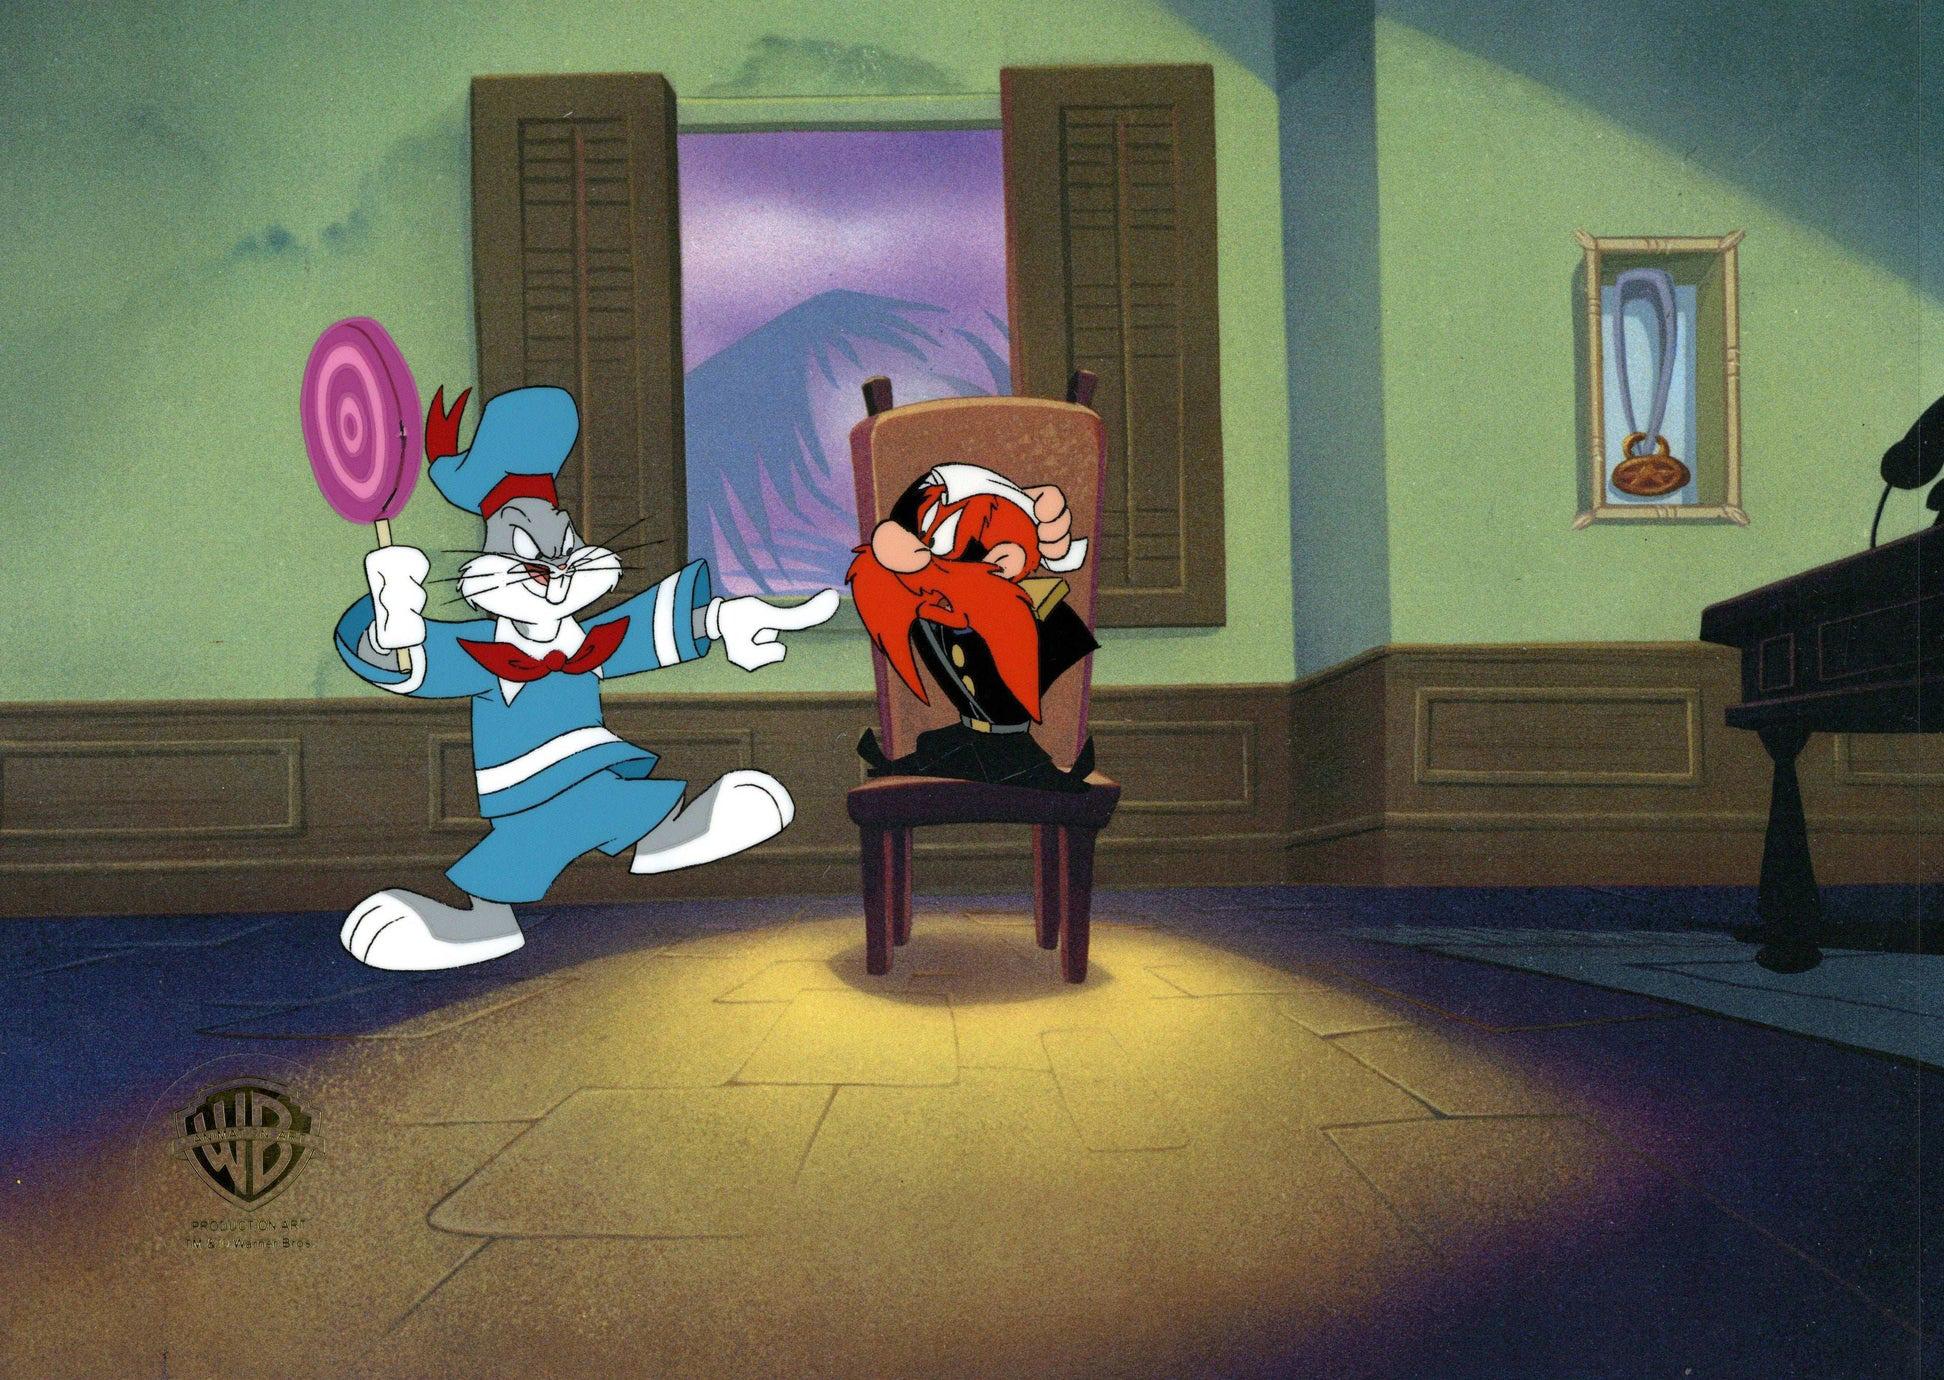 Looney Tunes Original Production Cel: Bugs Bunny and Yosemite Sam - Art by Looney Tunes Studio Artists